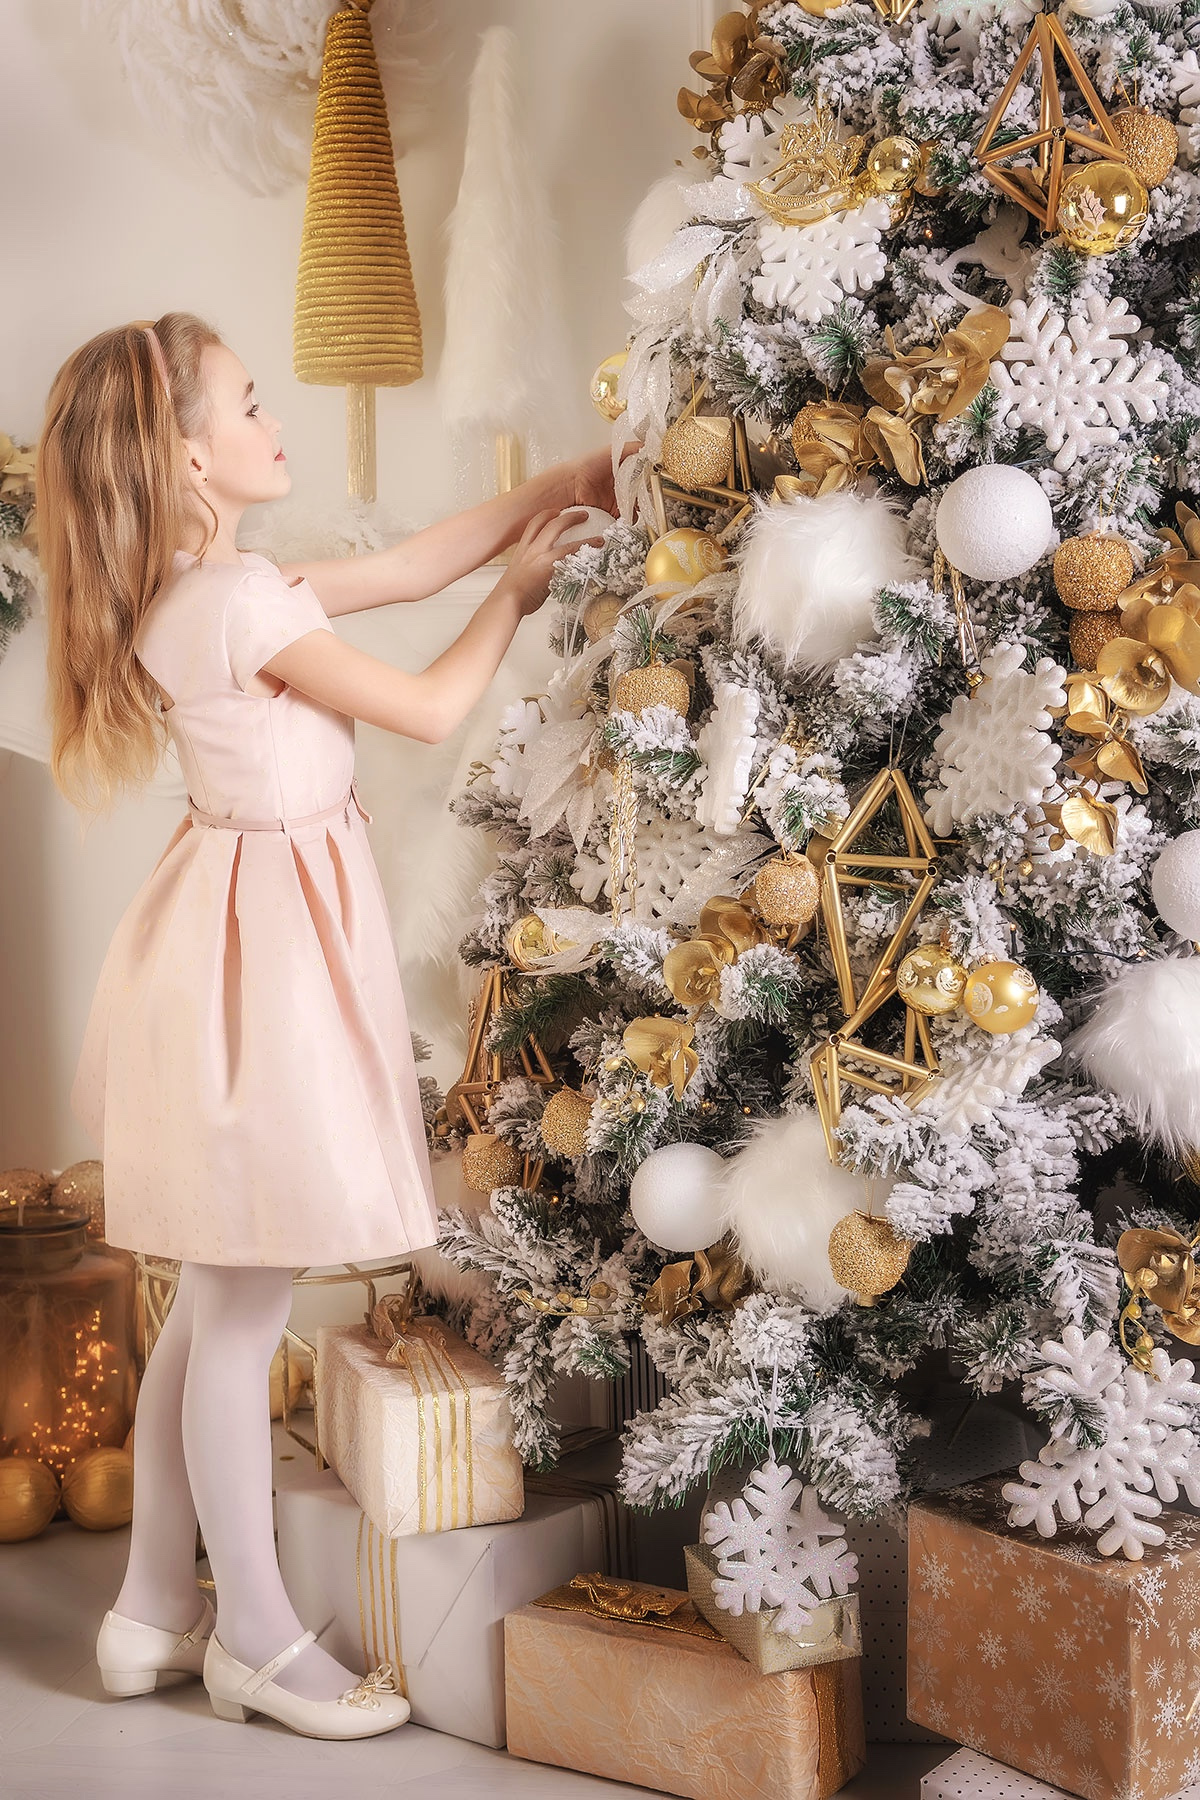 A little girl is preparing for the miracle Новый год ребёнок девочка елка украшение ёлки новогоднее чудо рождество подарки